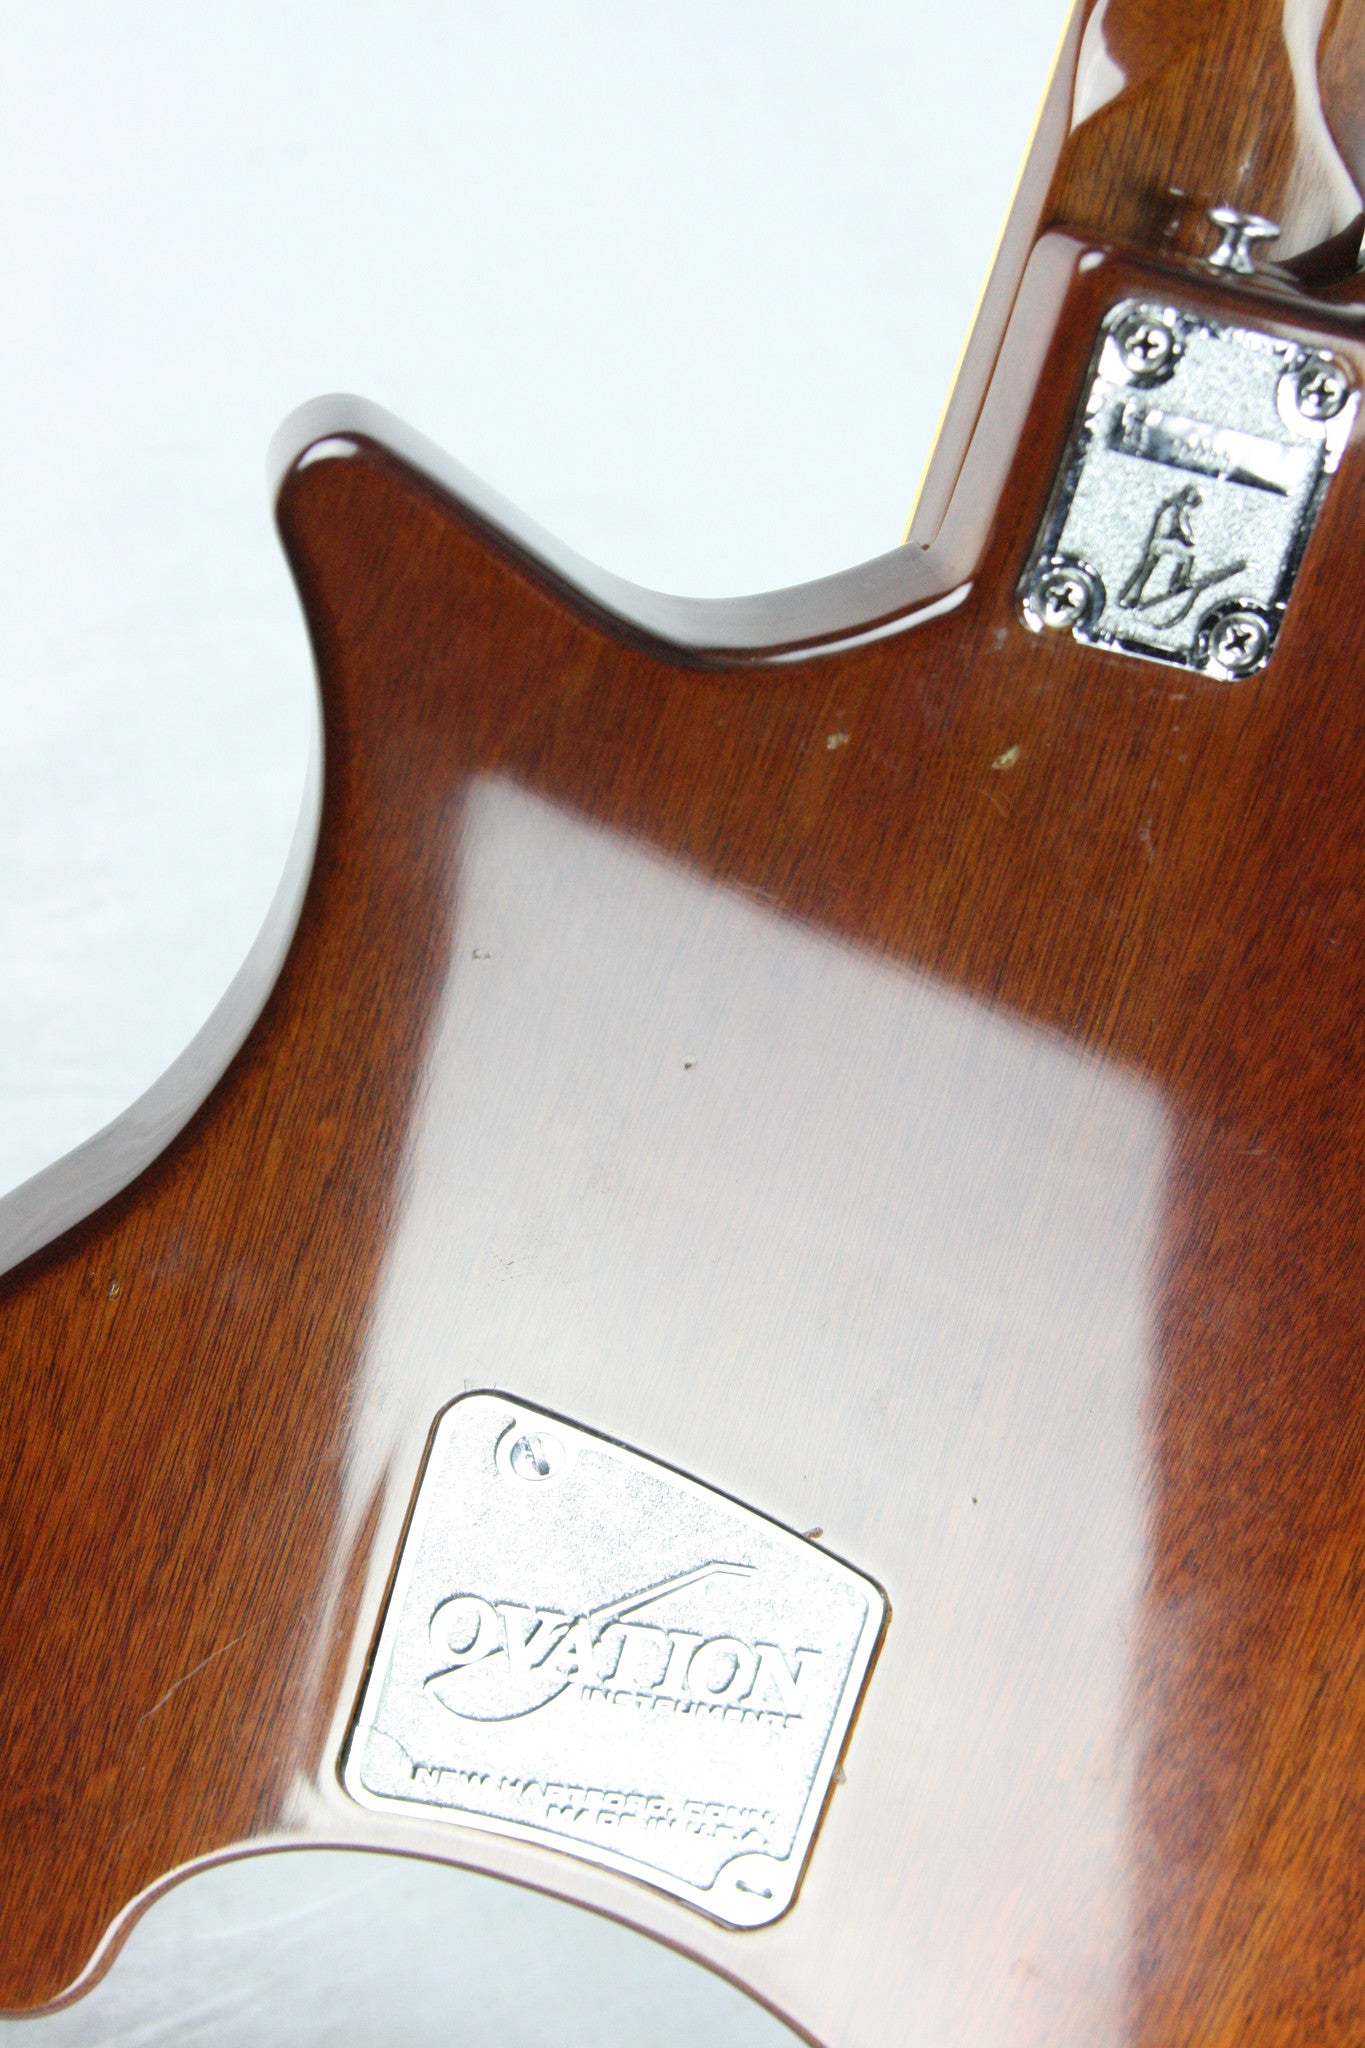 1974 Ovation Deacon Vintage Electric Guitar! Active Electronics, higher specs, Fancy Breadwinner